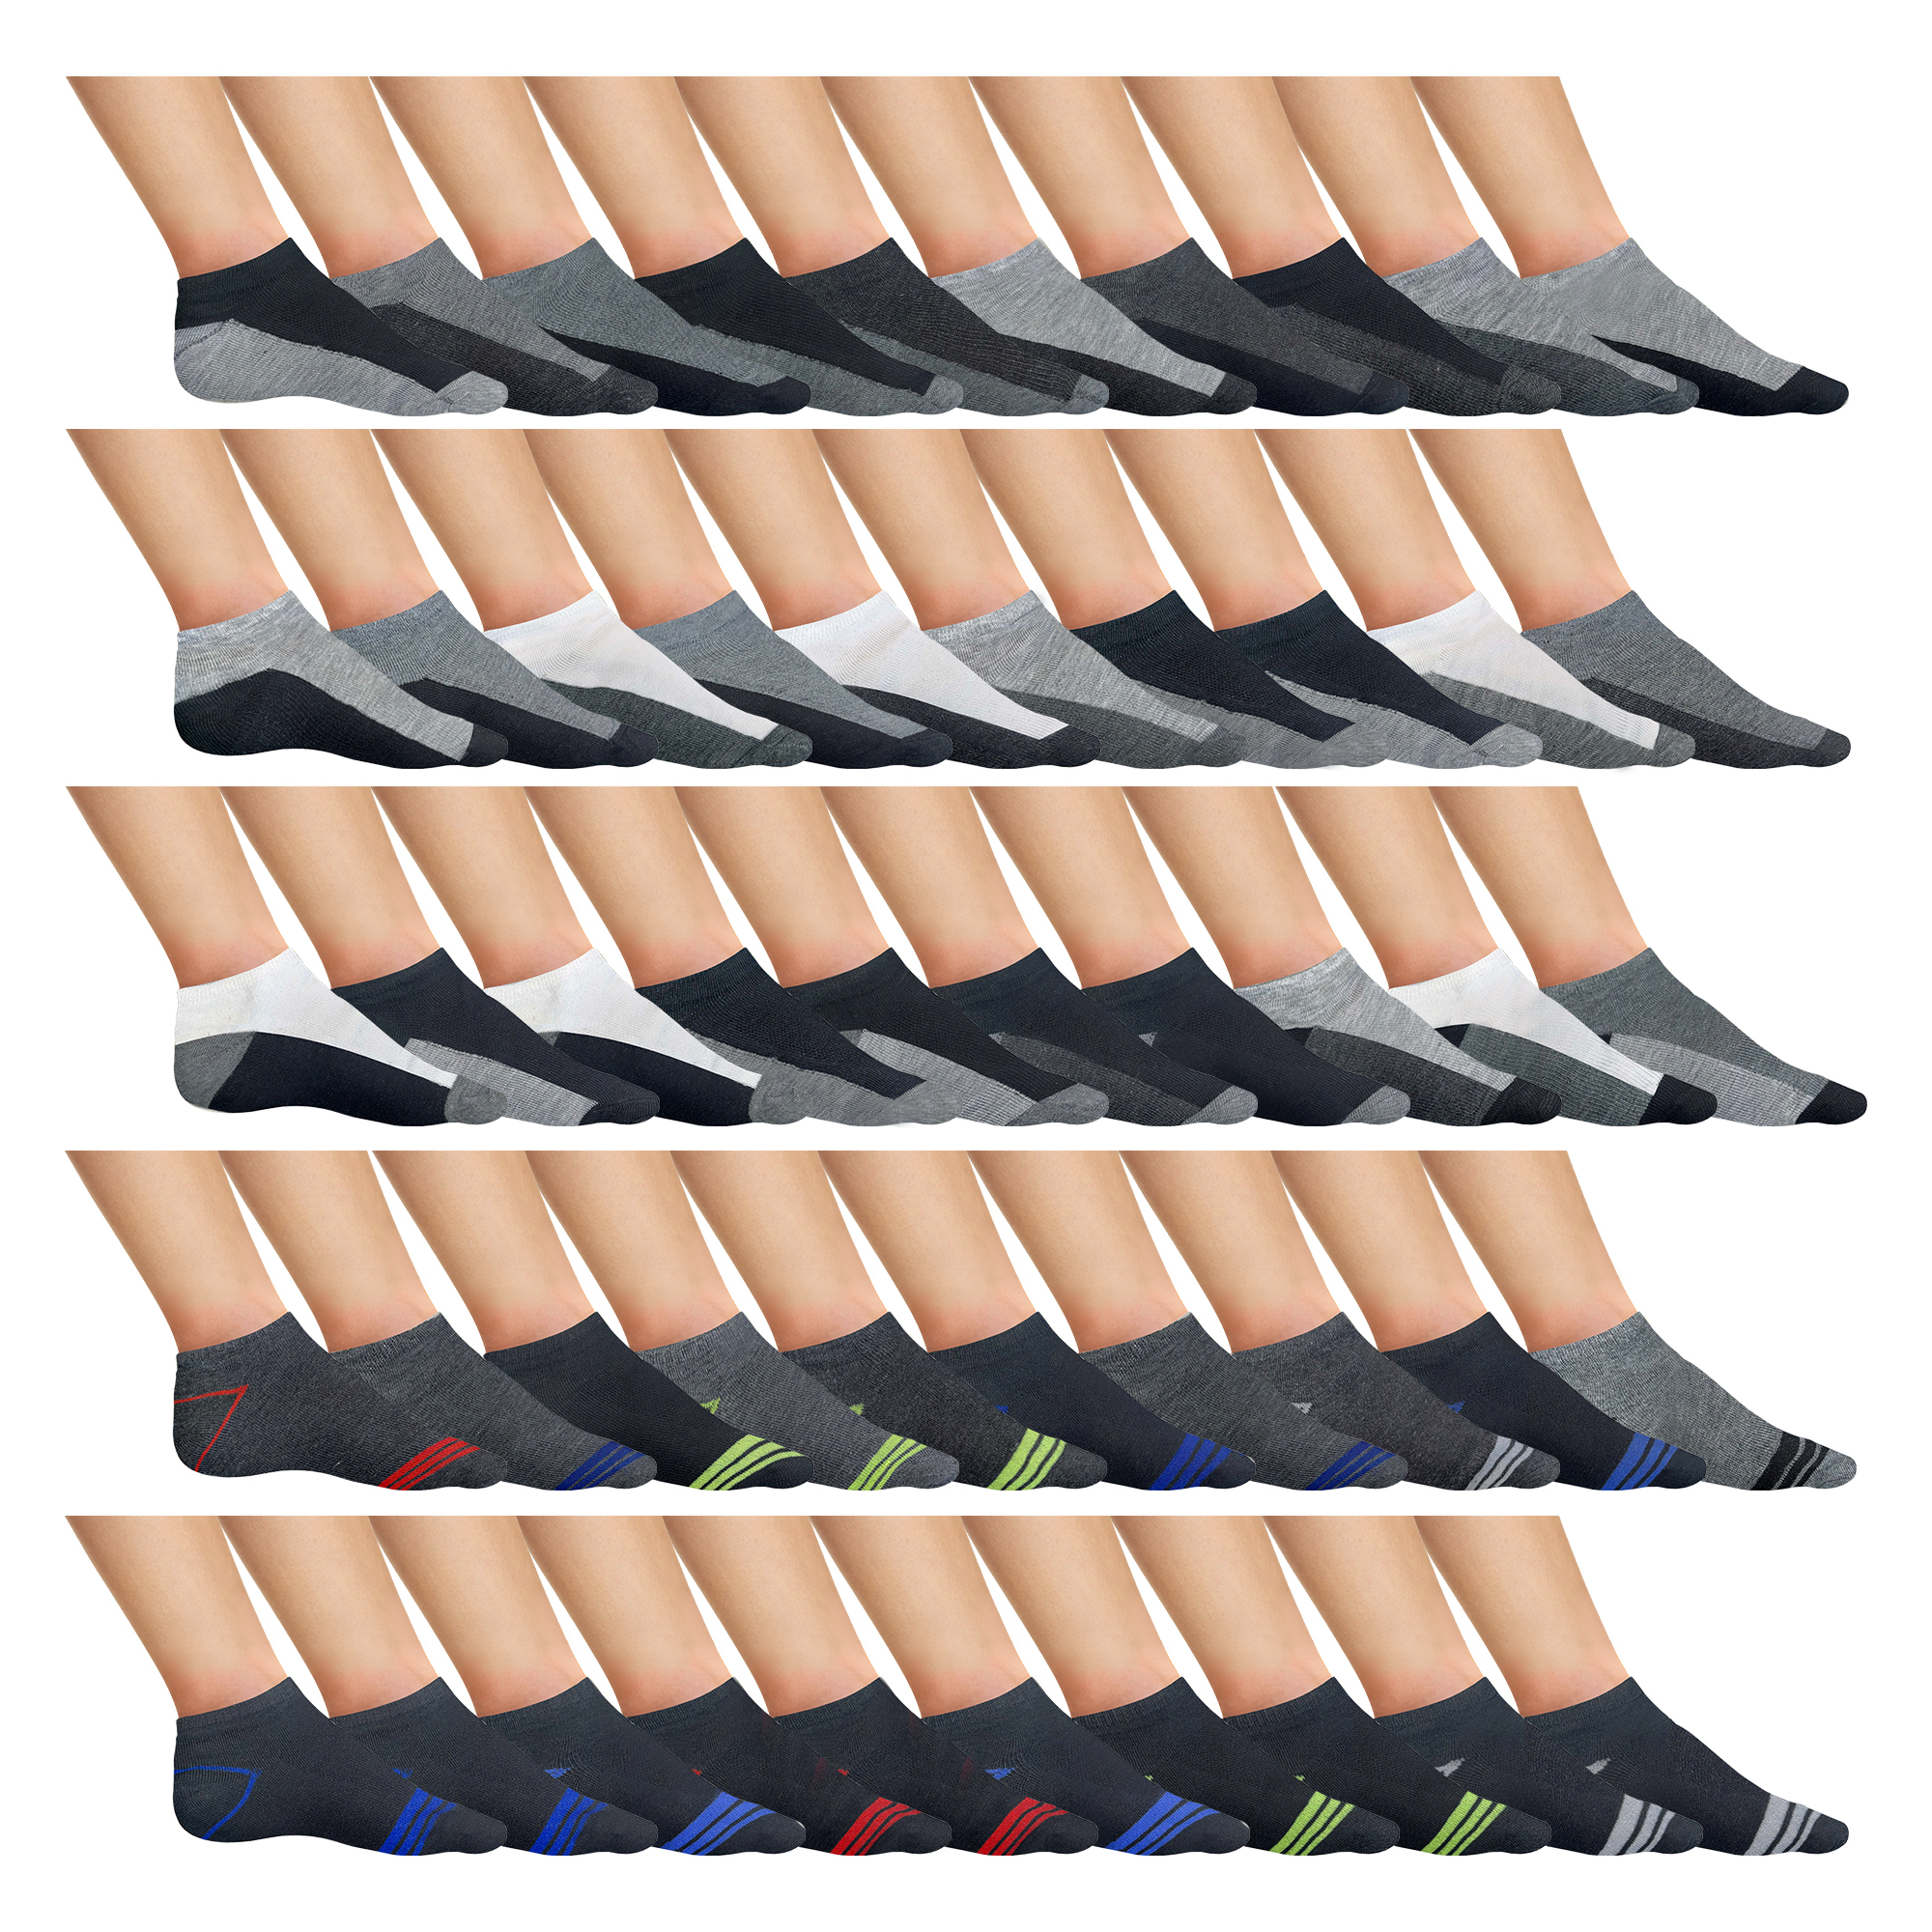 20 Pairs: Men's Moisture-Wicking Athletic Socks